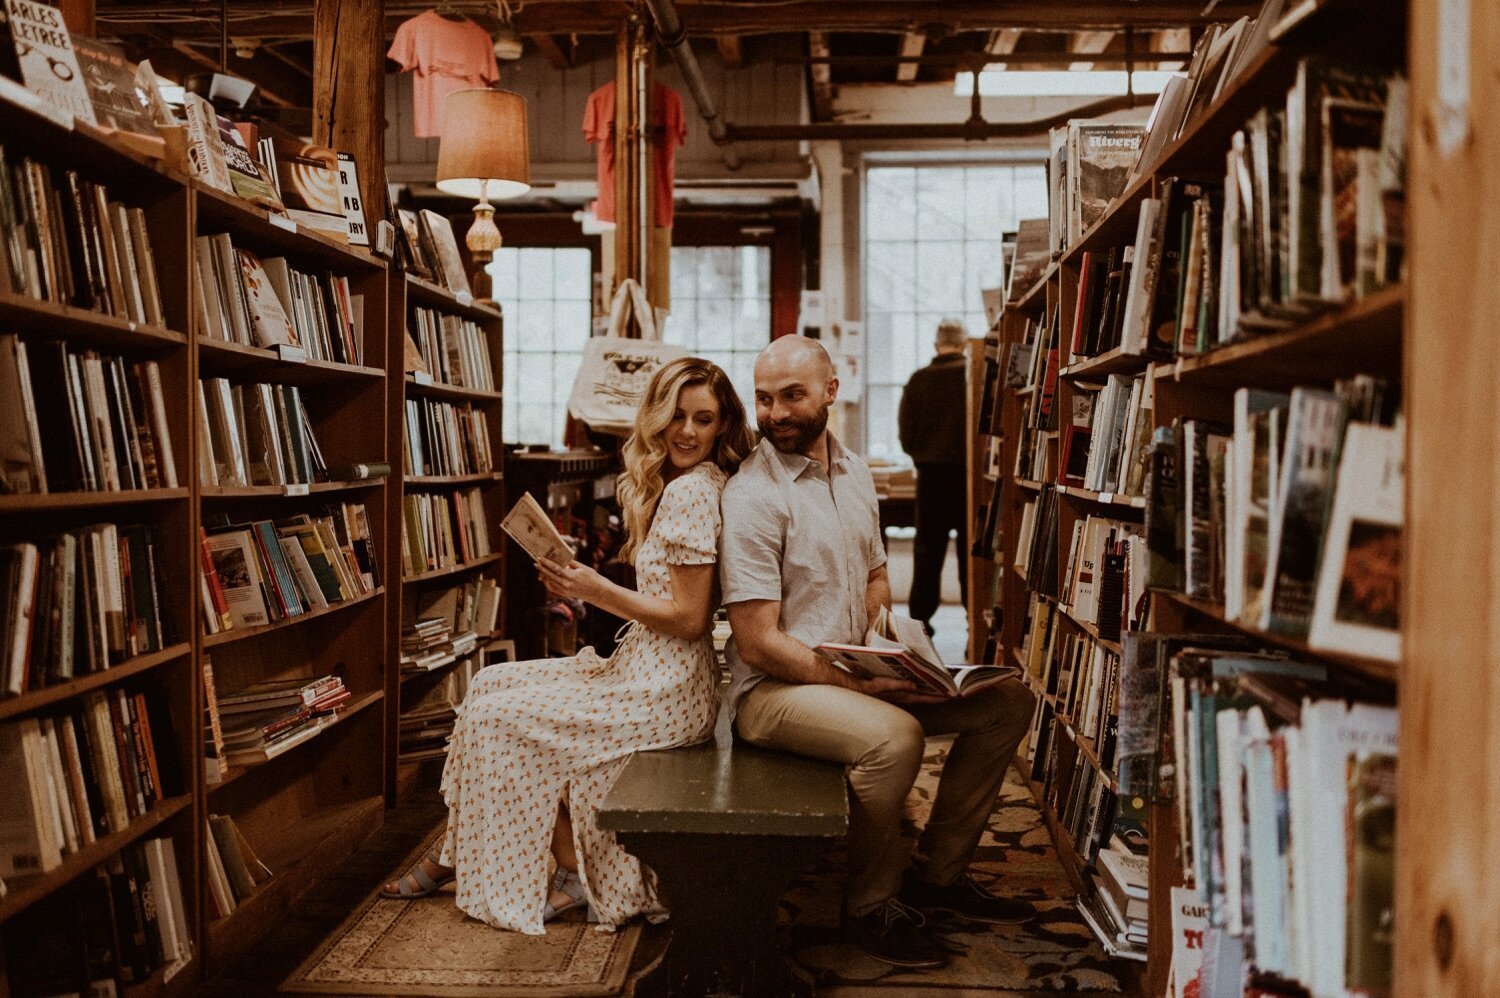 75-montague-ma-romantic-book-vinyl-store-engagement-session-boston-photographer.jpg